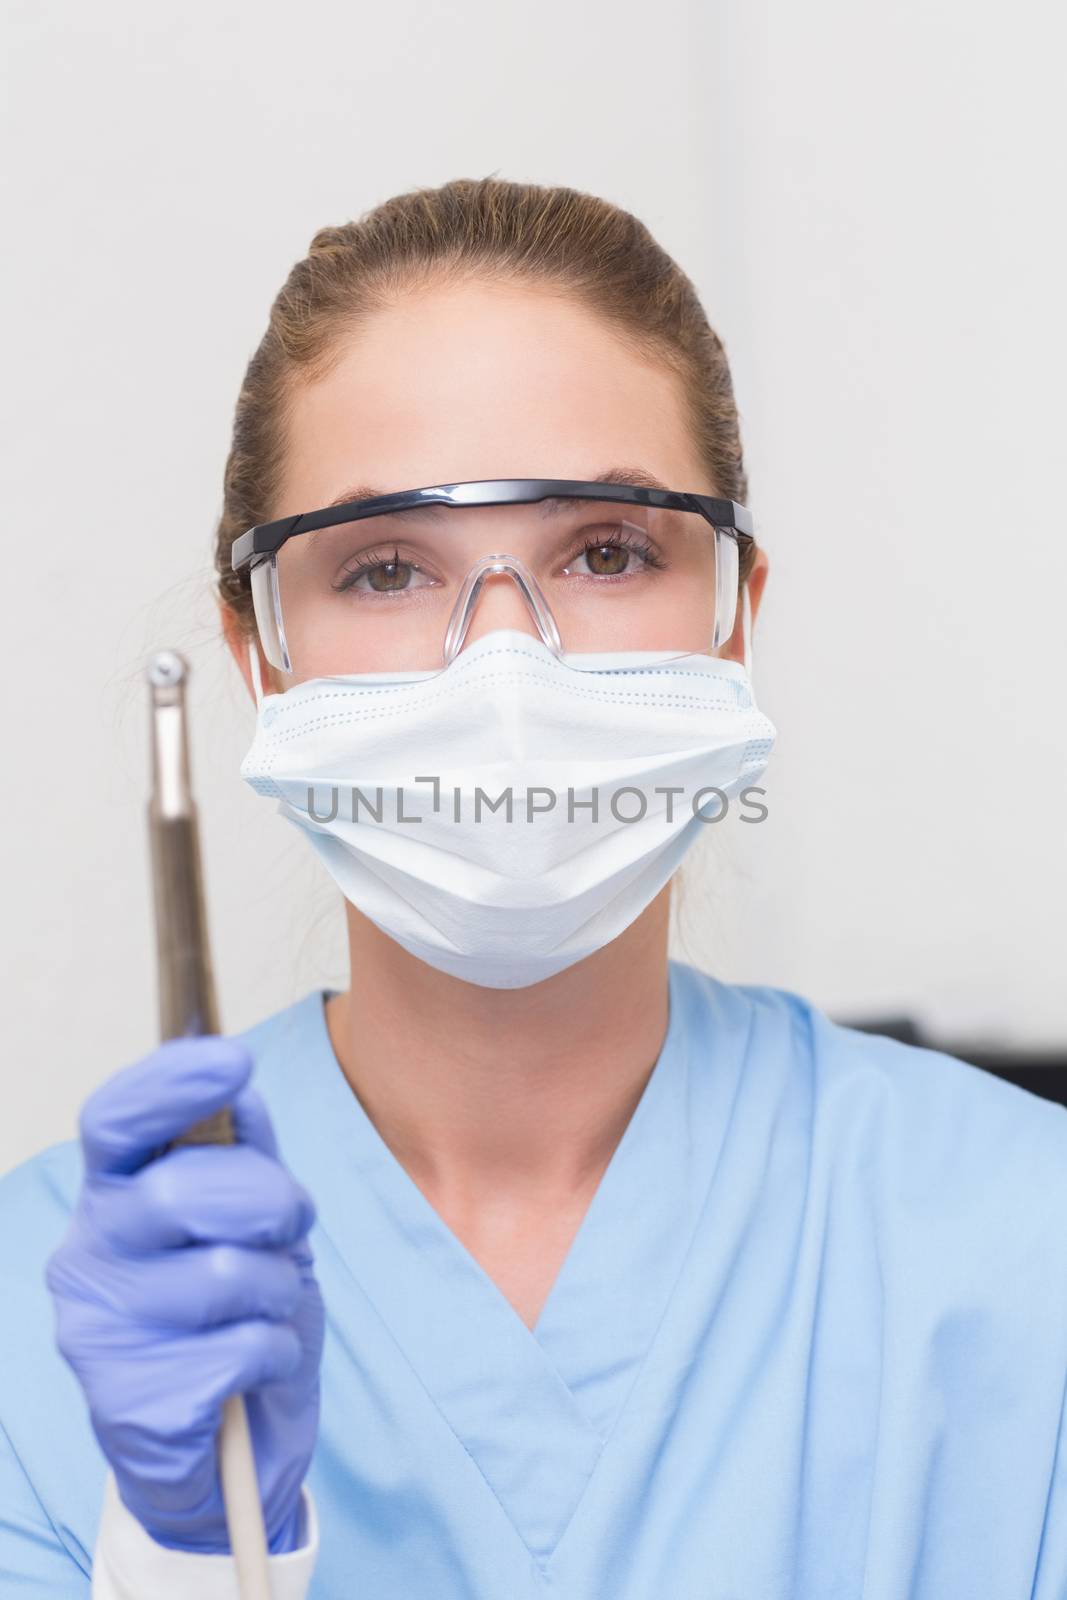 Dentist in blue scrubs holding dental drill by Wavebreakmedia